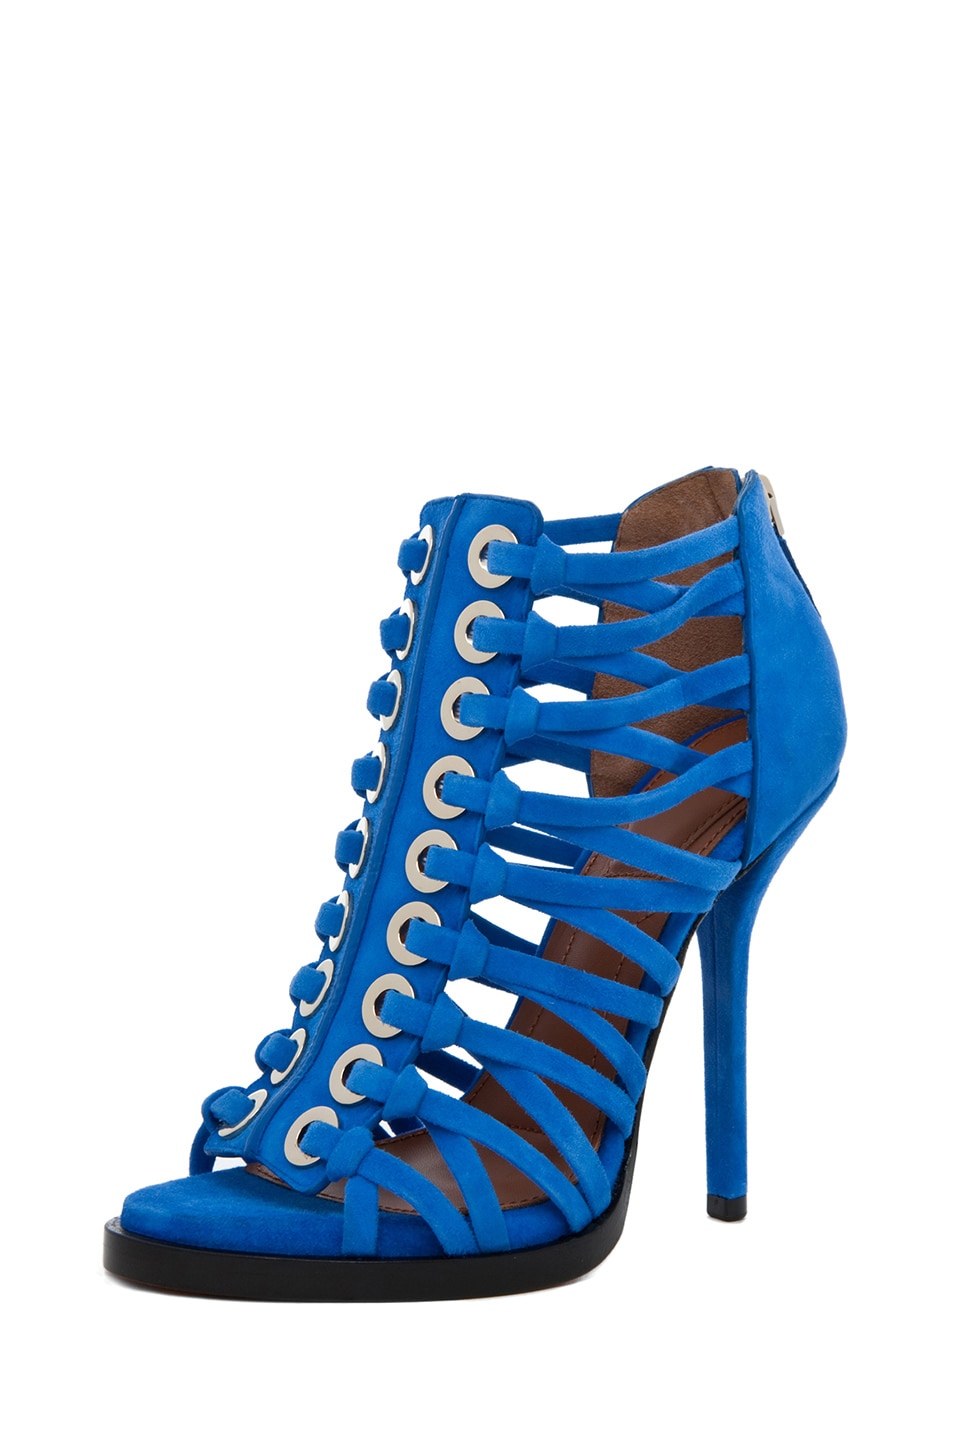 Givenchy Zenaide Suede Nautical Eyelet Heel in Blue | FWRD